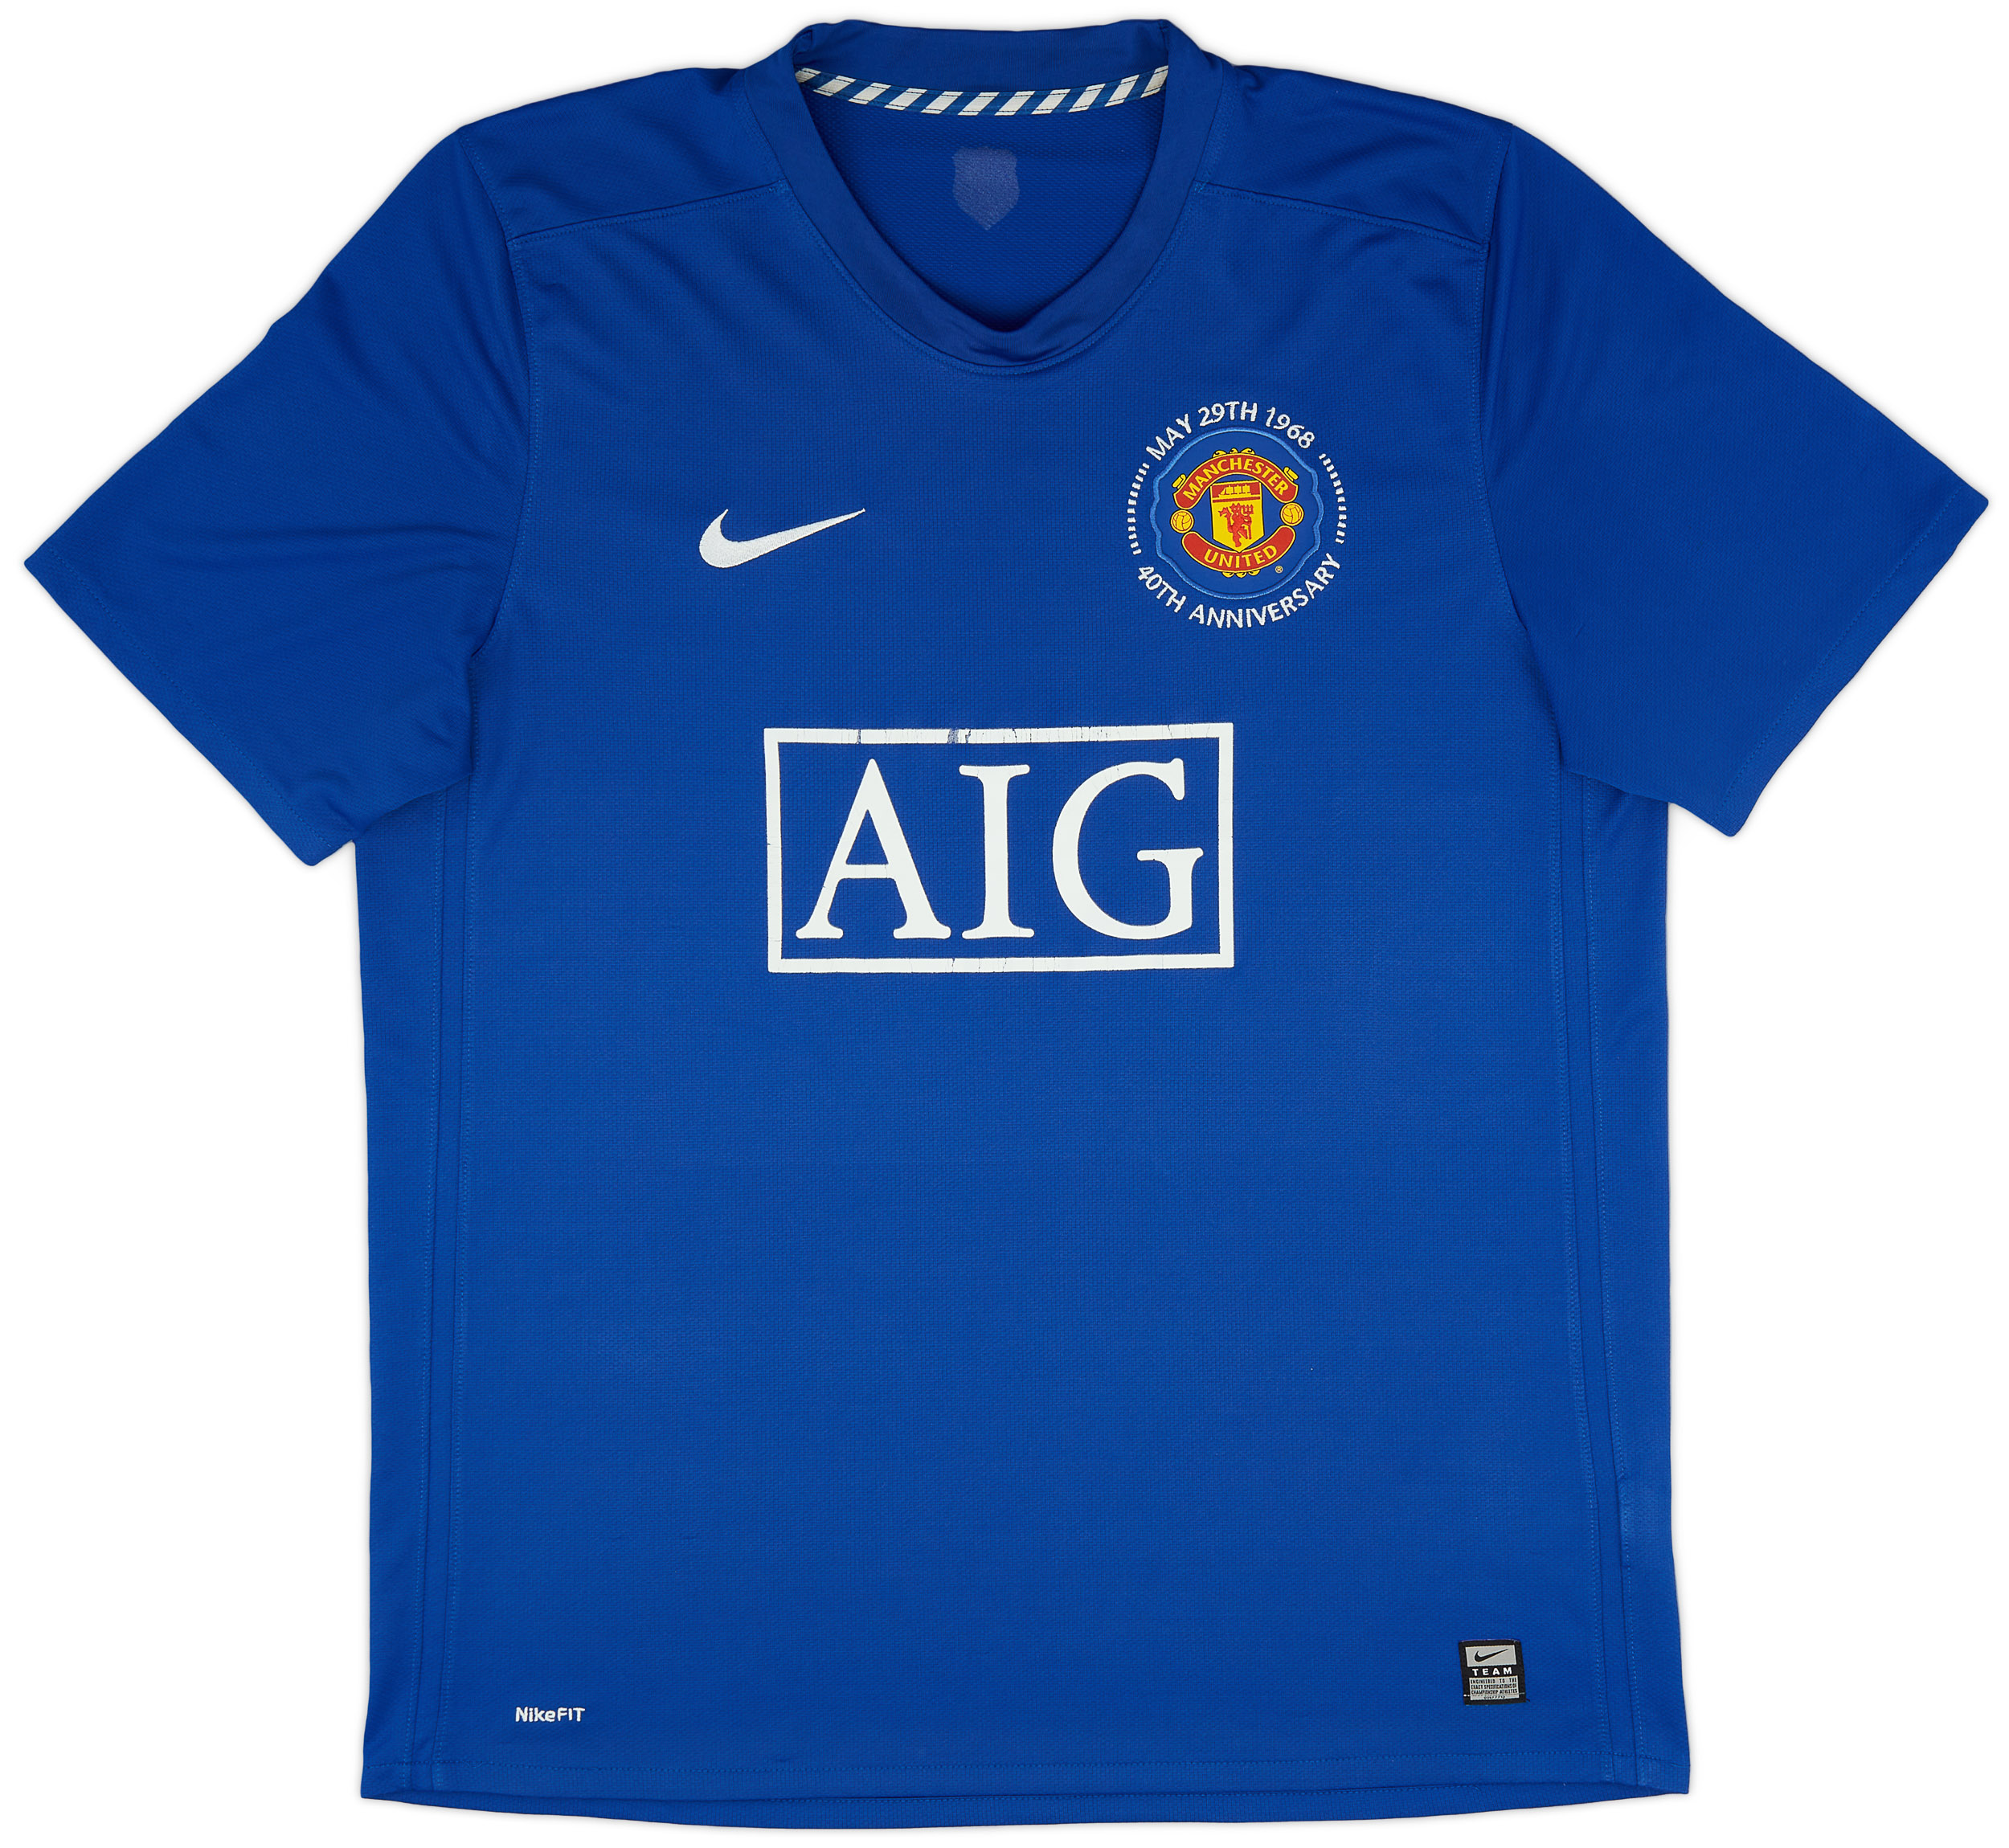 2008-09 Manchester United Third Shirt - 5/10 - ()